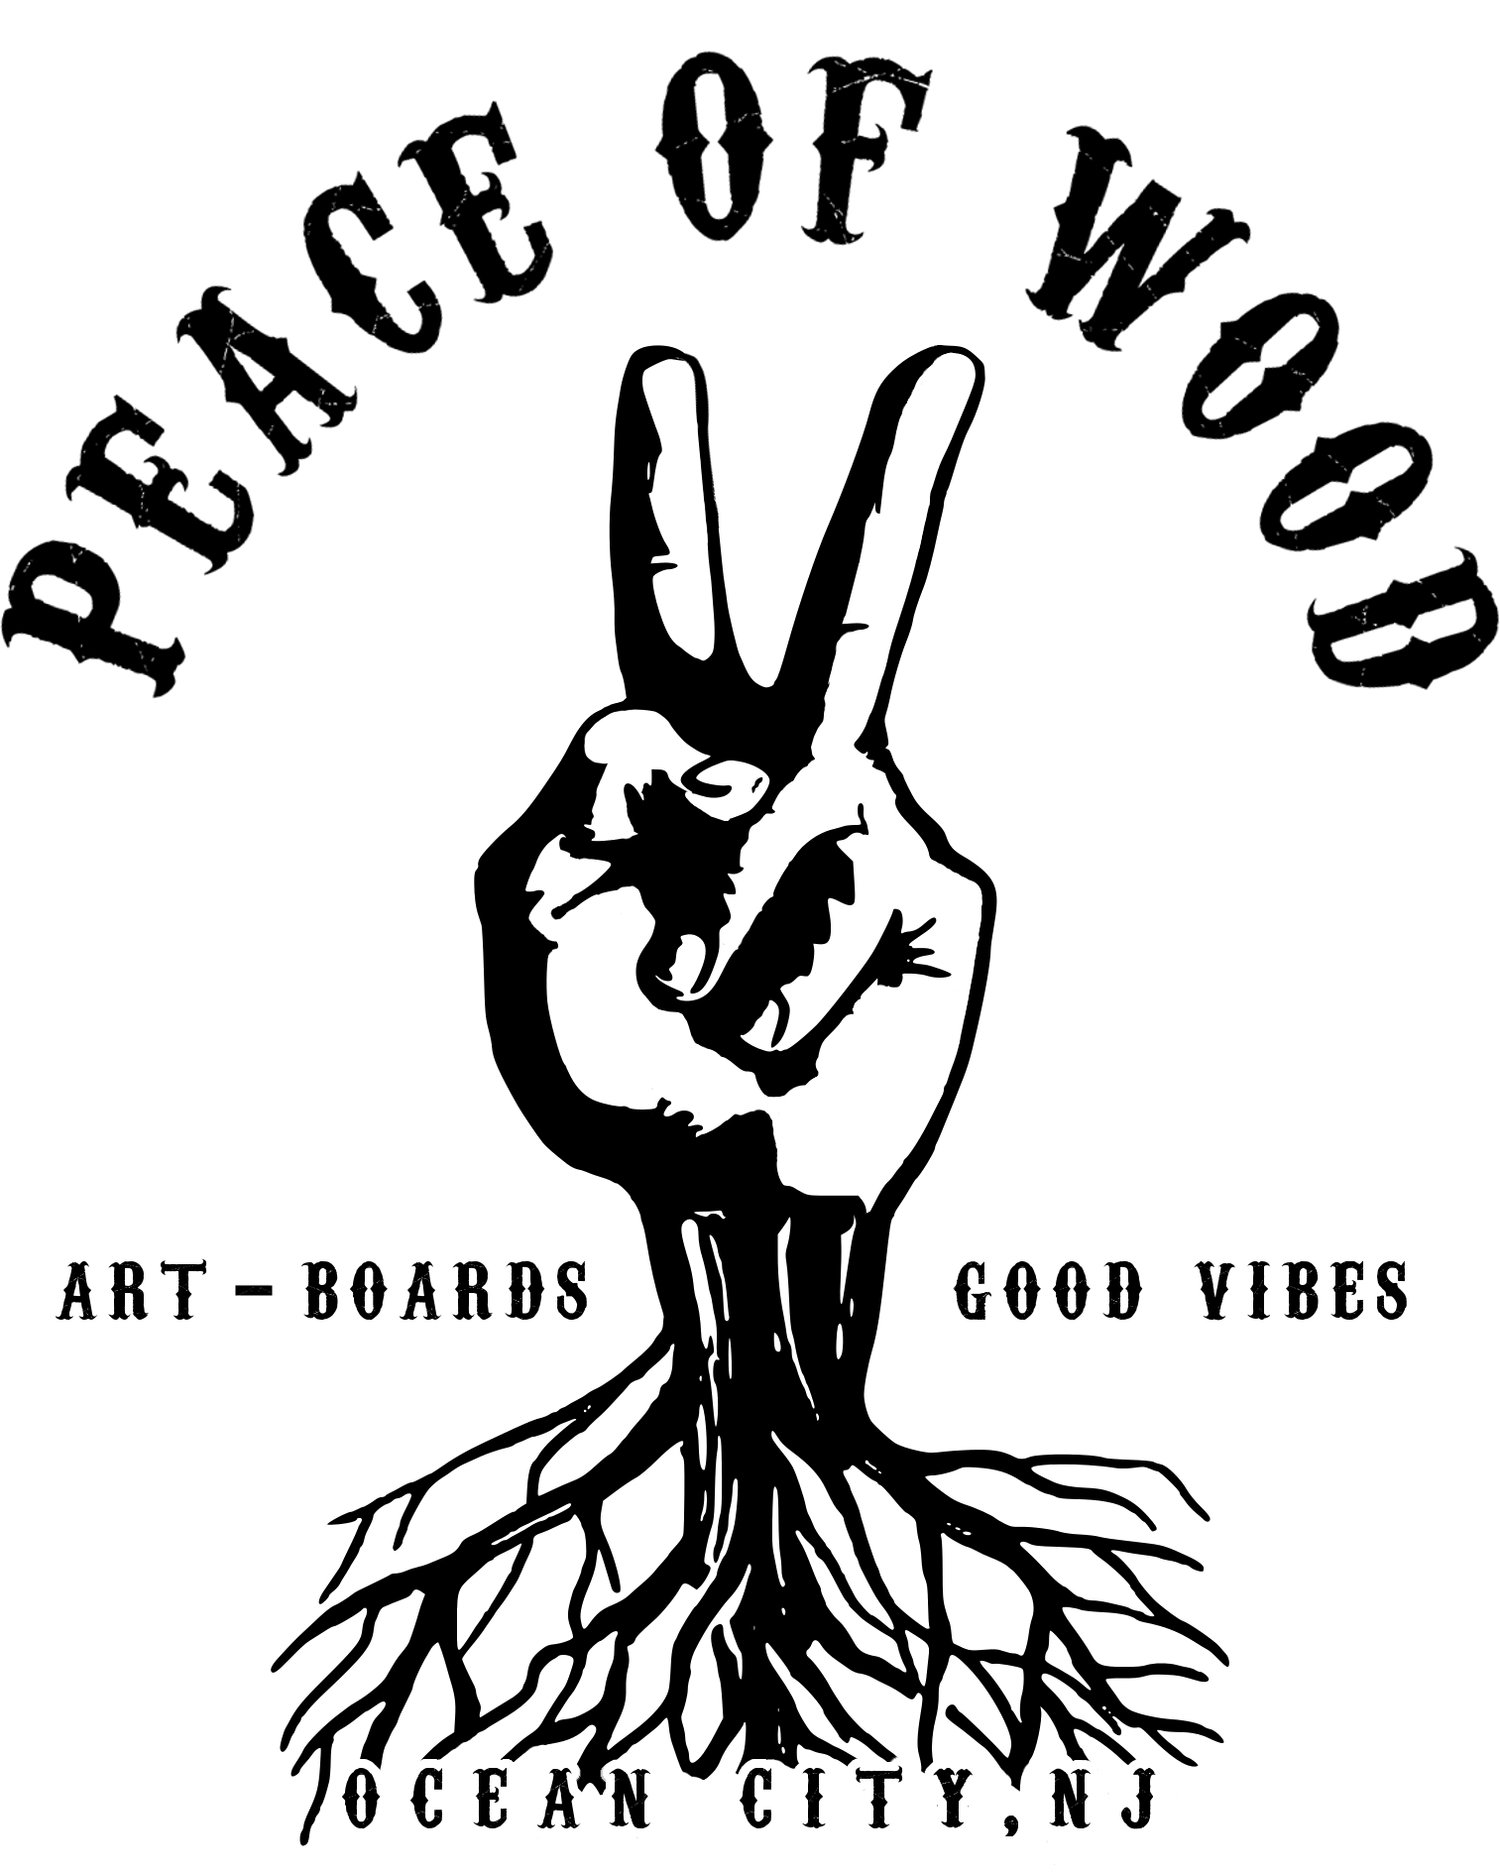 Peace of Wood